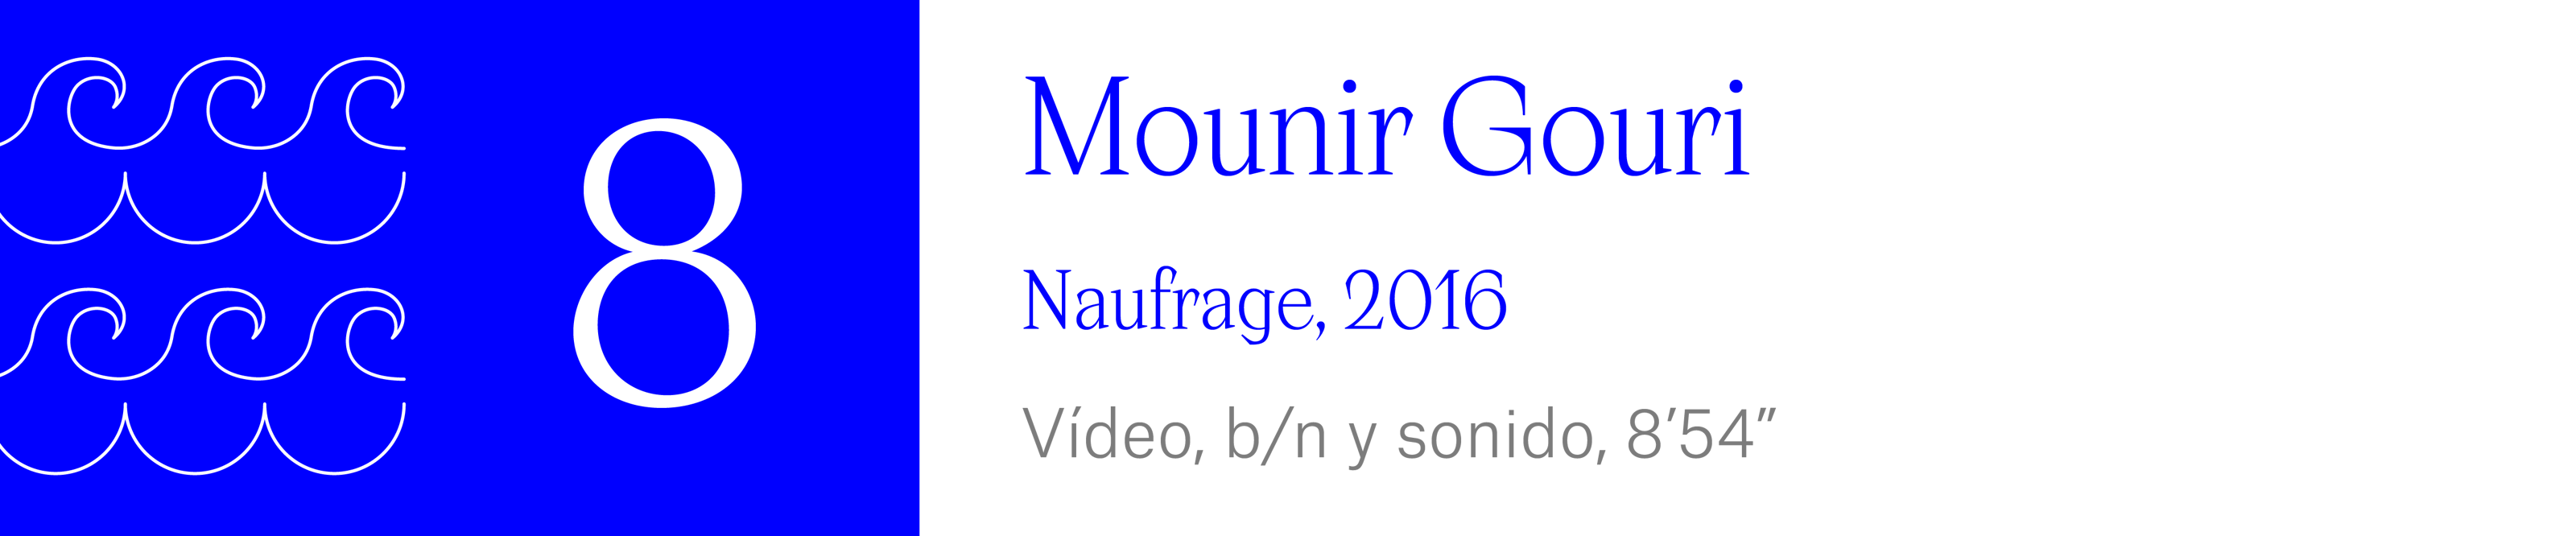 Mounir Gouri - Naufrage, 2016 Vídeo, b/n y sonido, 8’54”